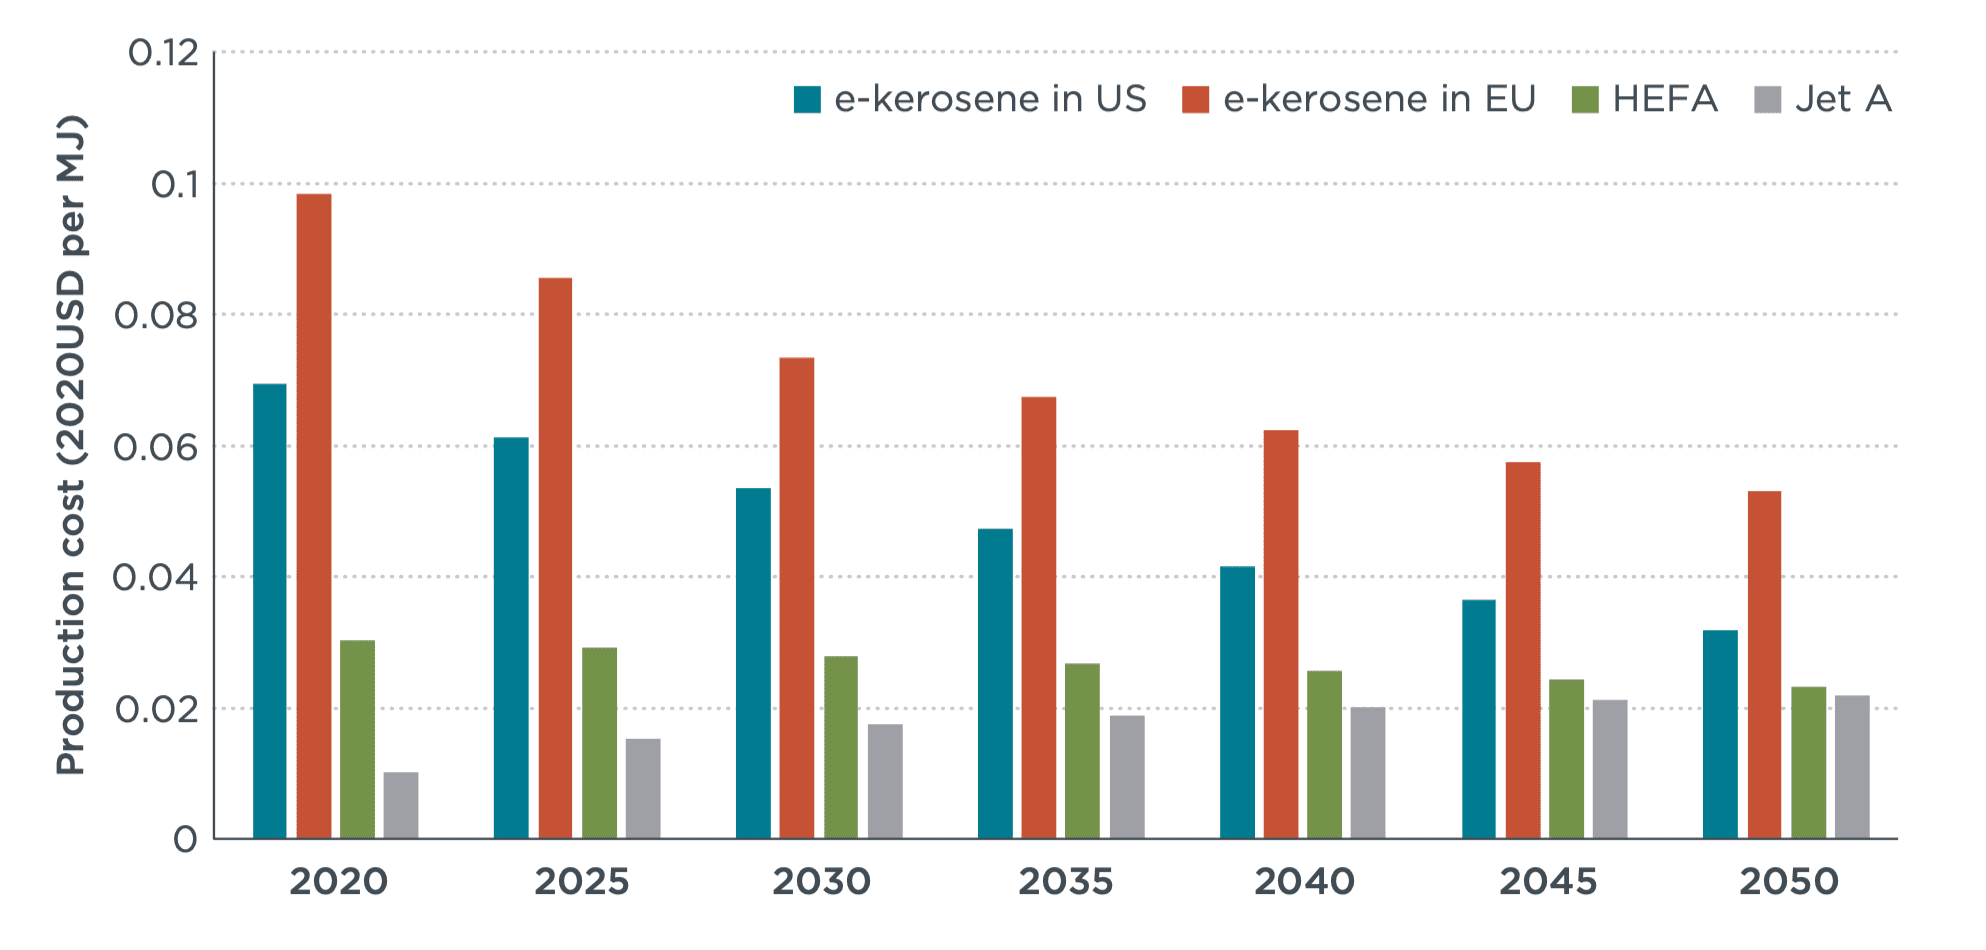 figure showing e-kerosene production cost in US and EU